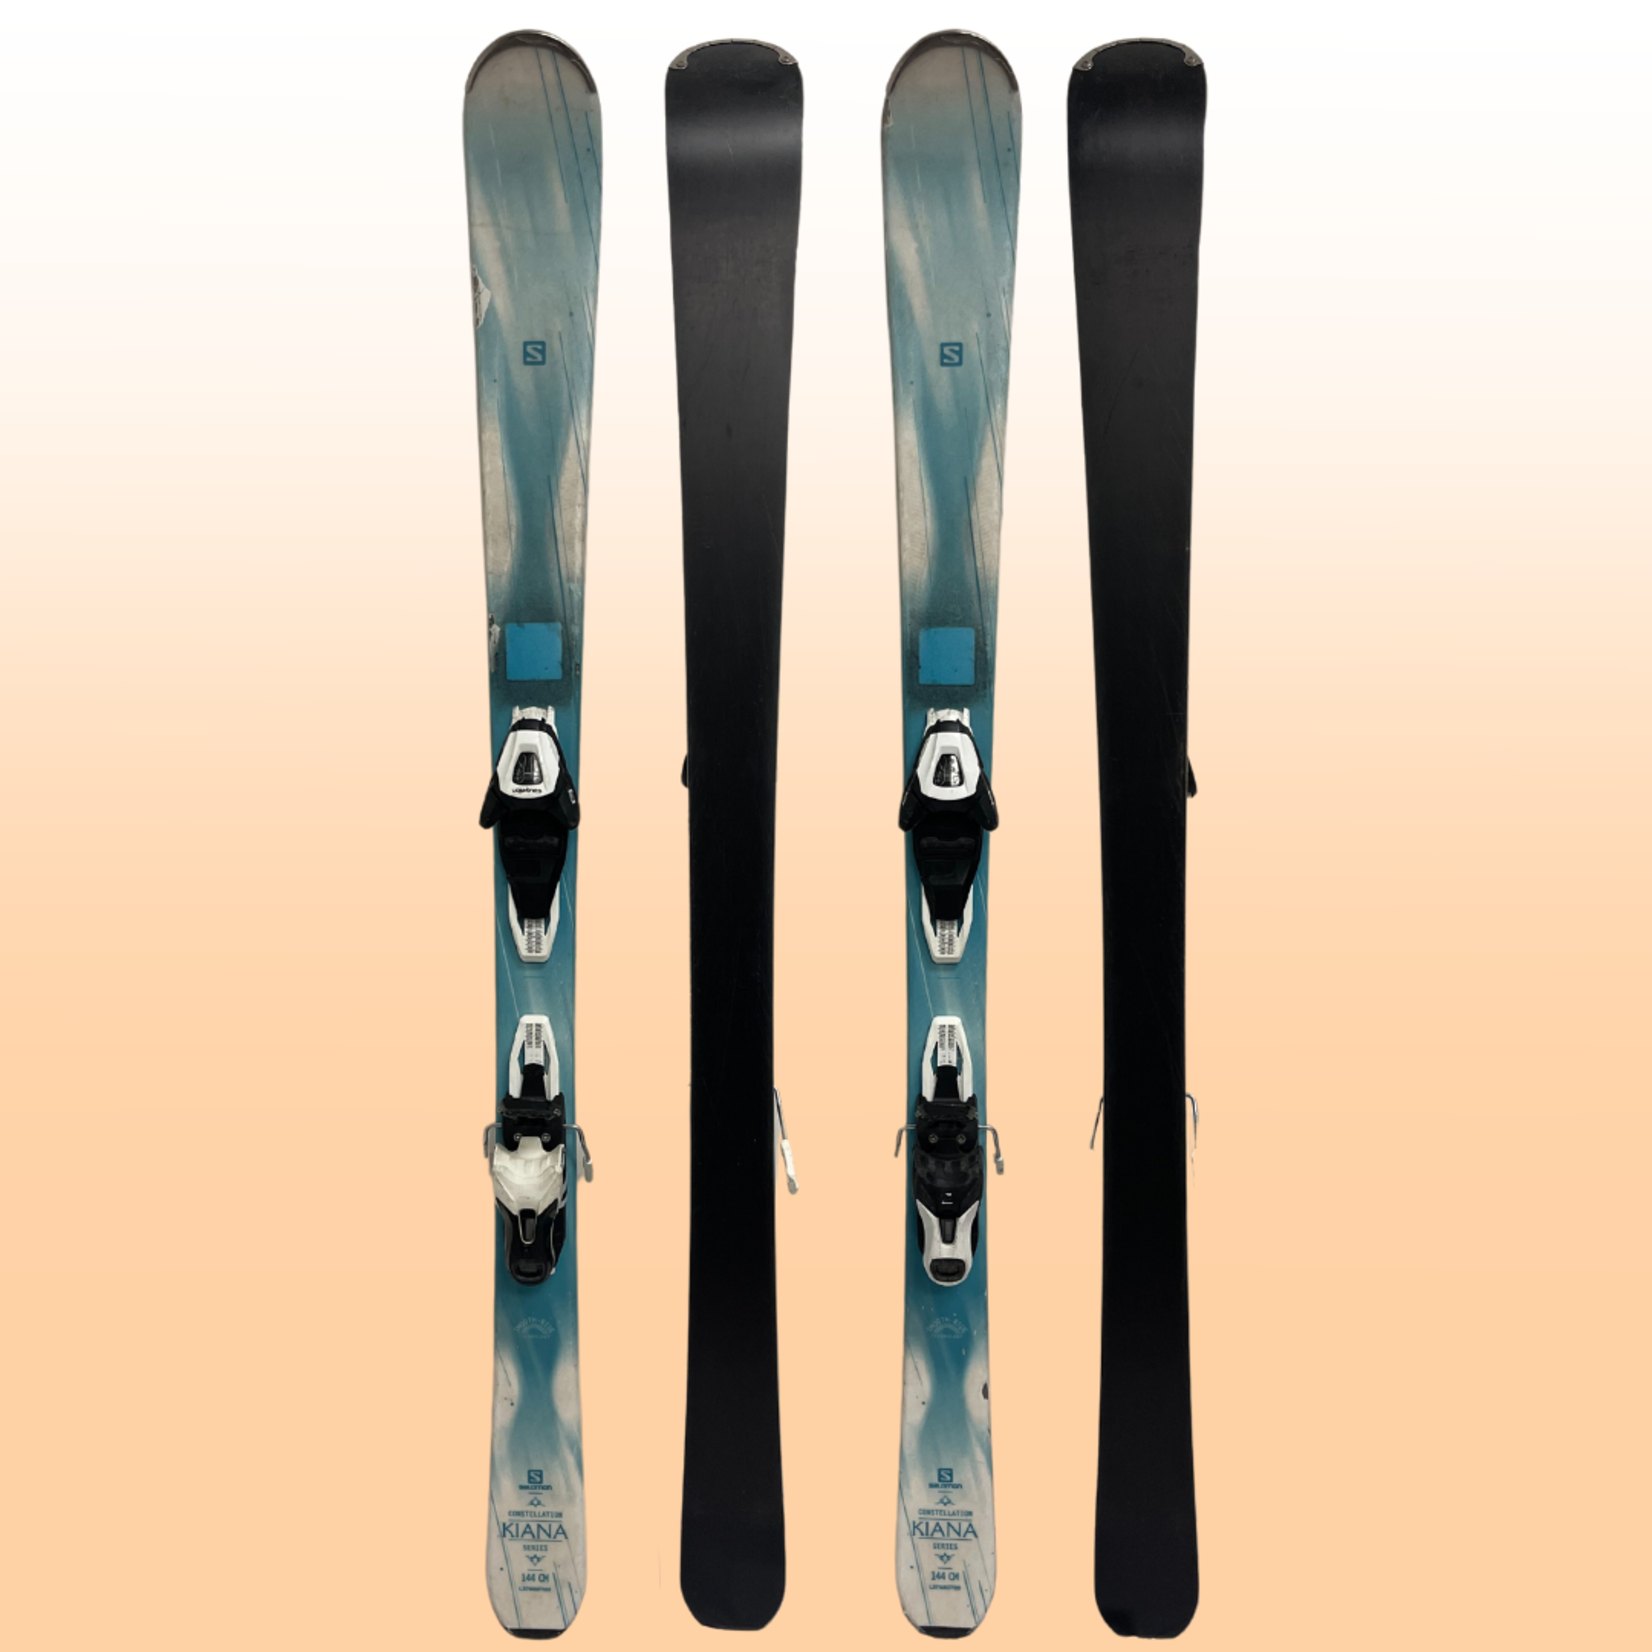 Salomon Salomon Constellation Kiana Skis, Size 131cm